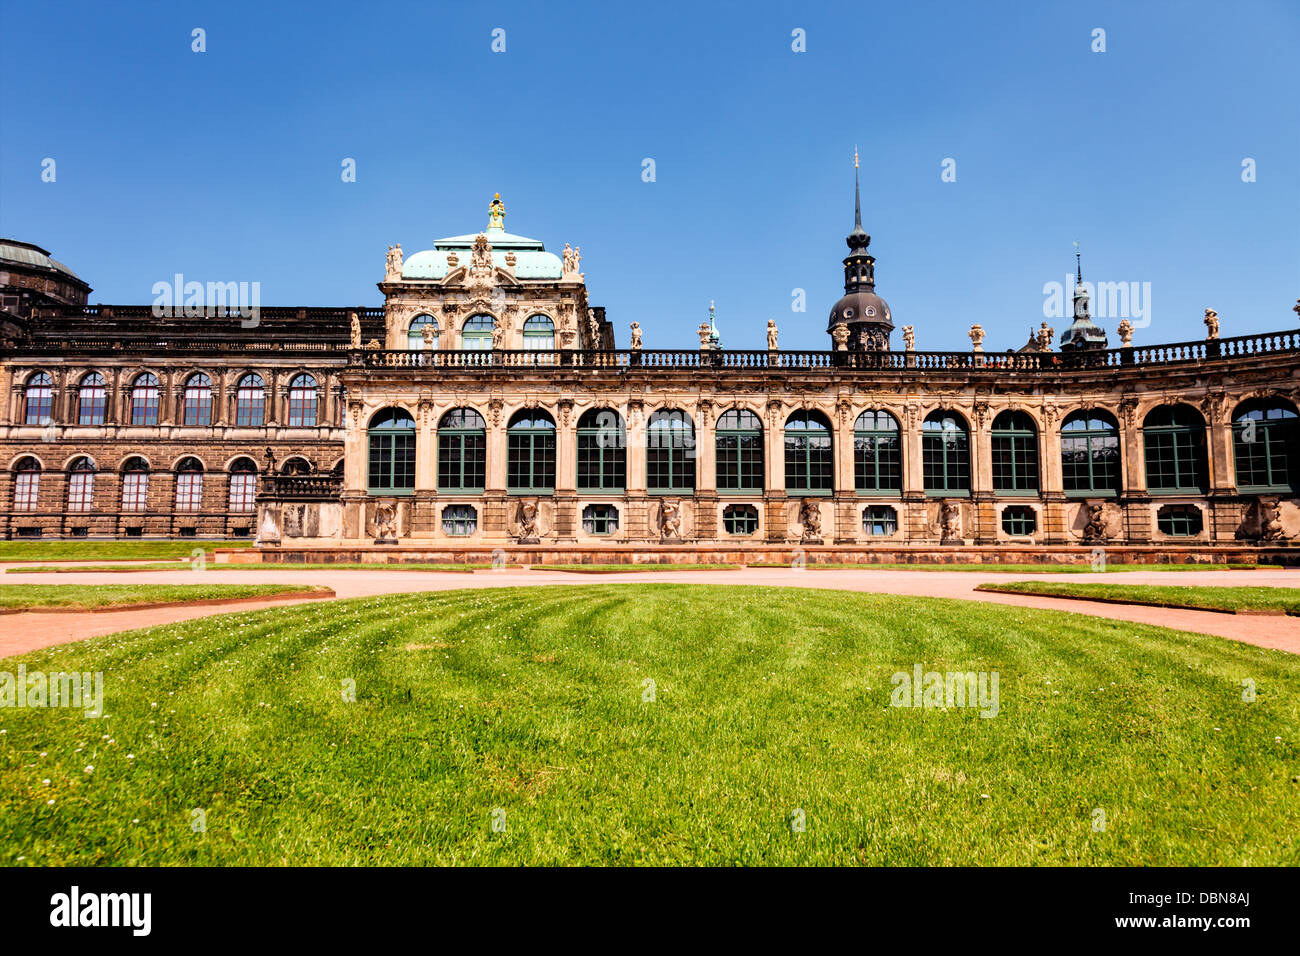 Zwinger stile Rococò palace in Dresden Foto Stock